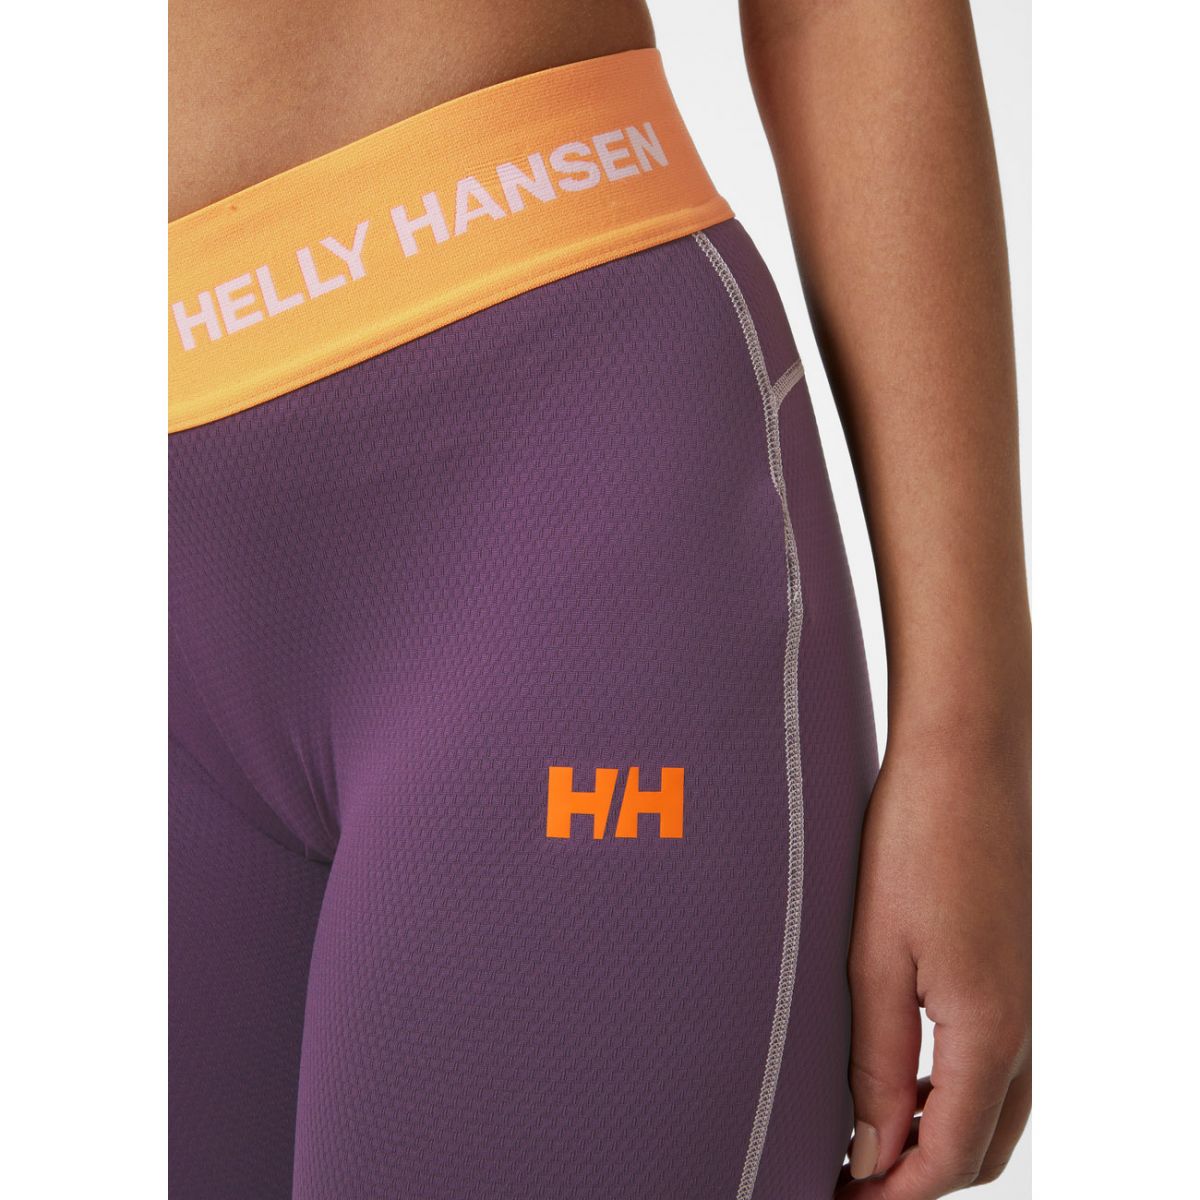 Helly Hansen Lifa Active Pant, dame, lilla